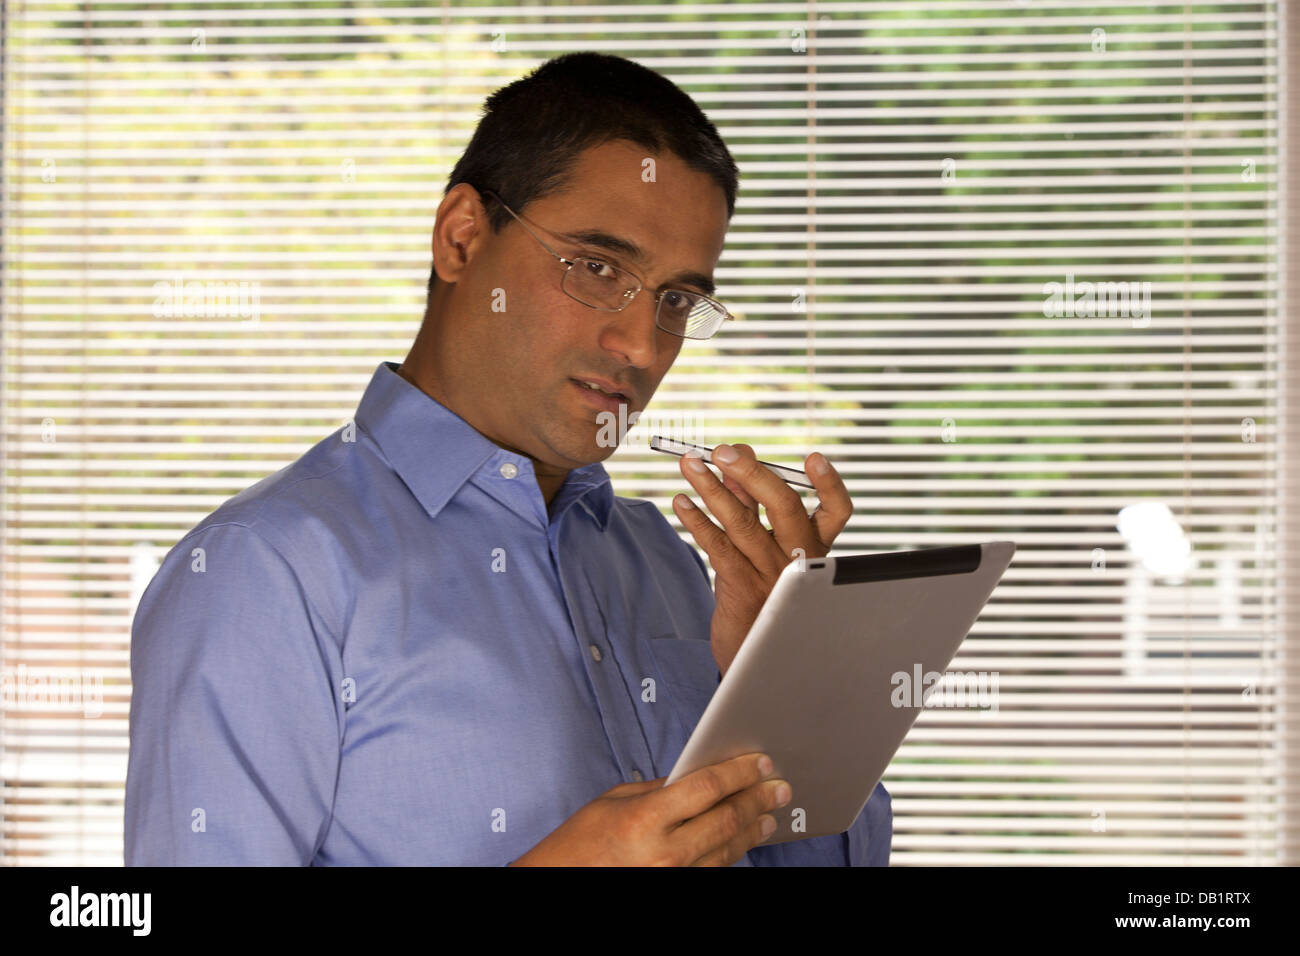 man talking on phone holding ipad Stock Photo